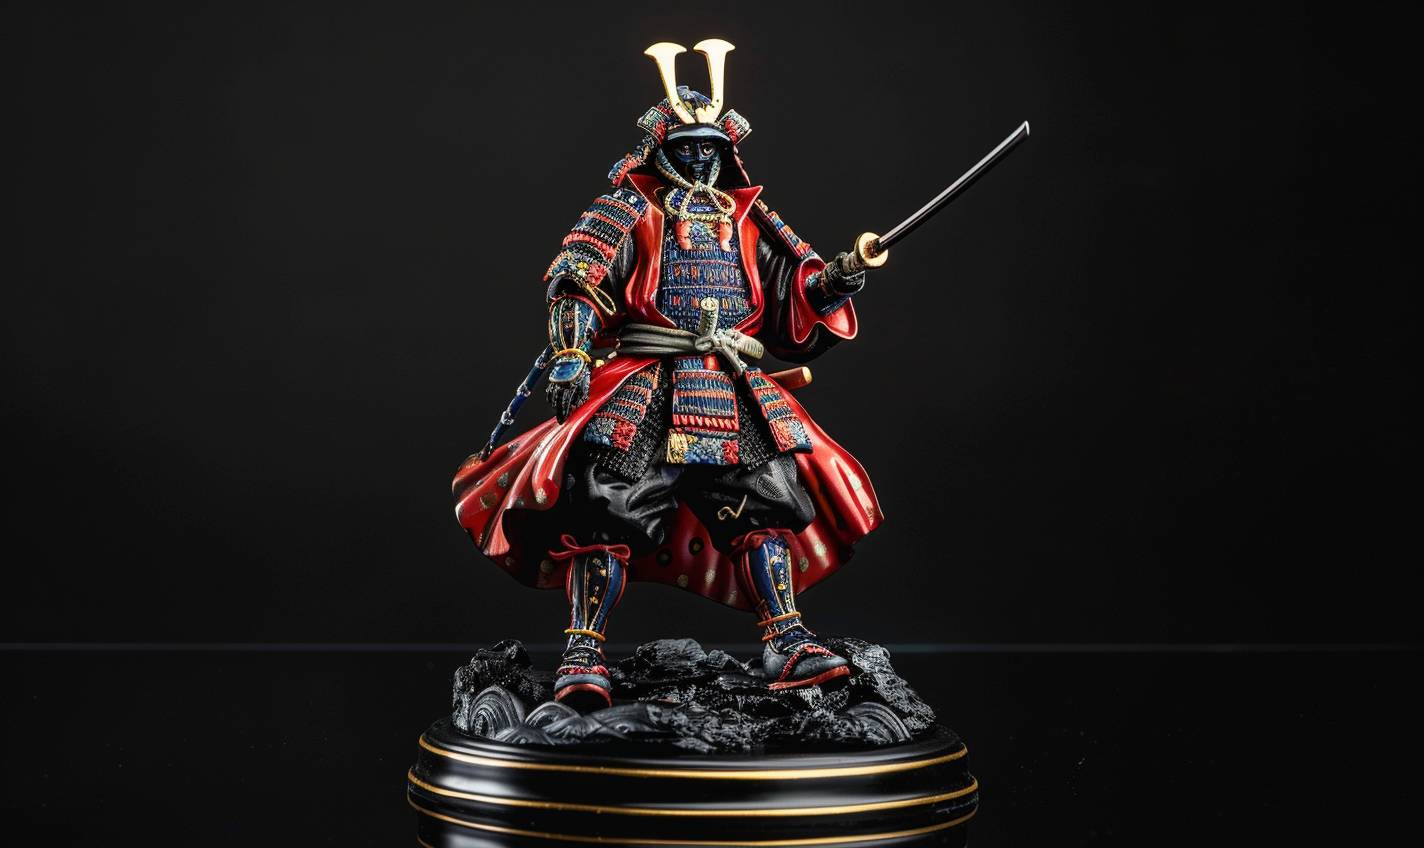 Samurai figurine designed and painted by Liu Ye on black background